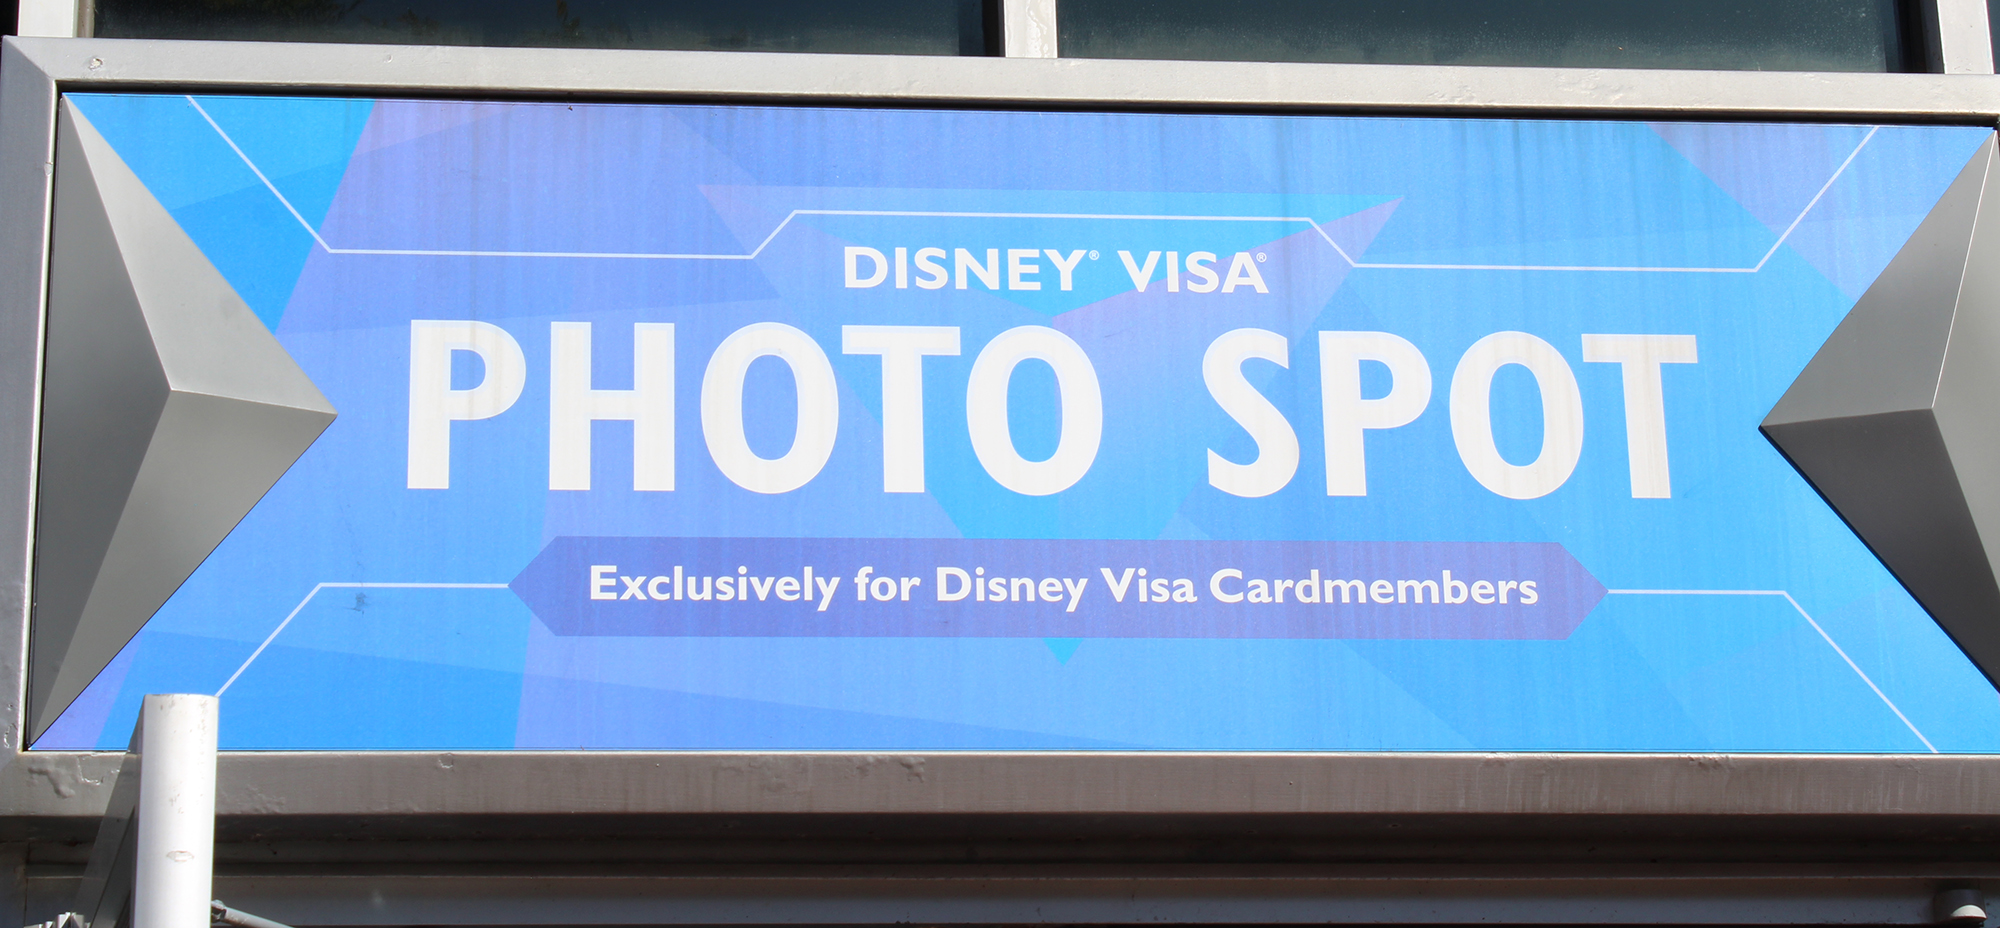 Disney Visa Photo Spot